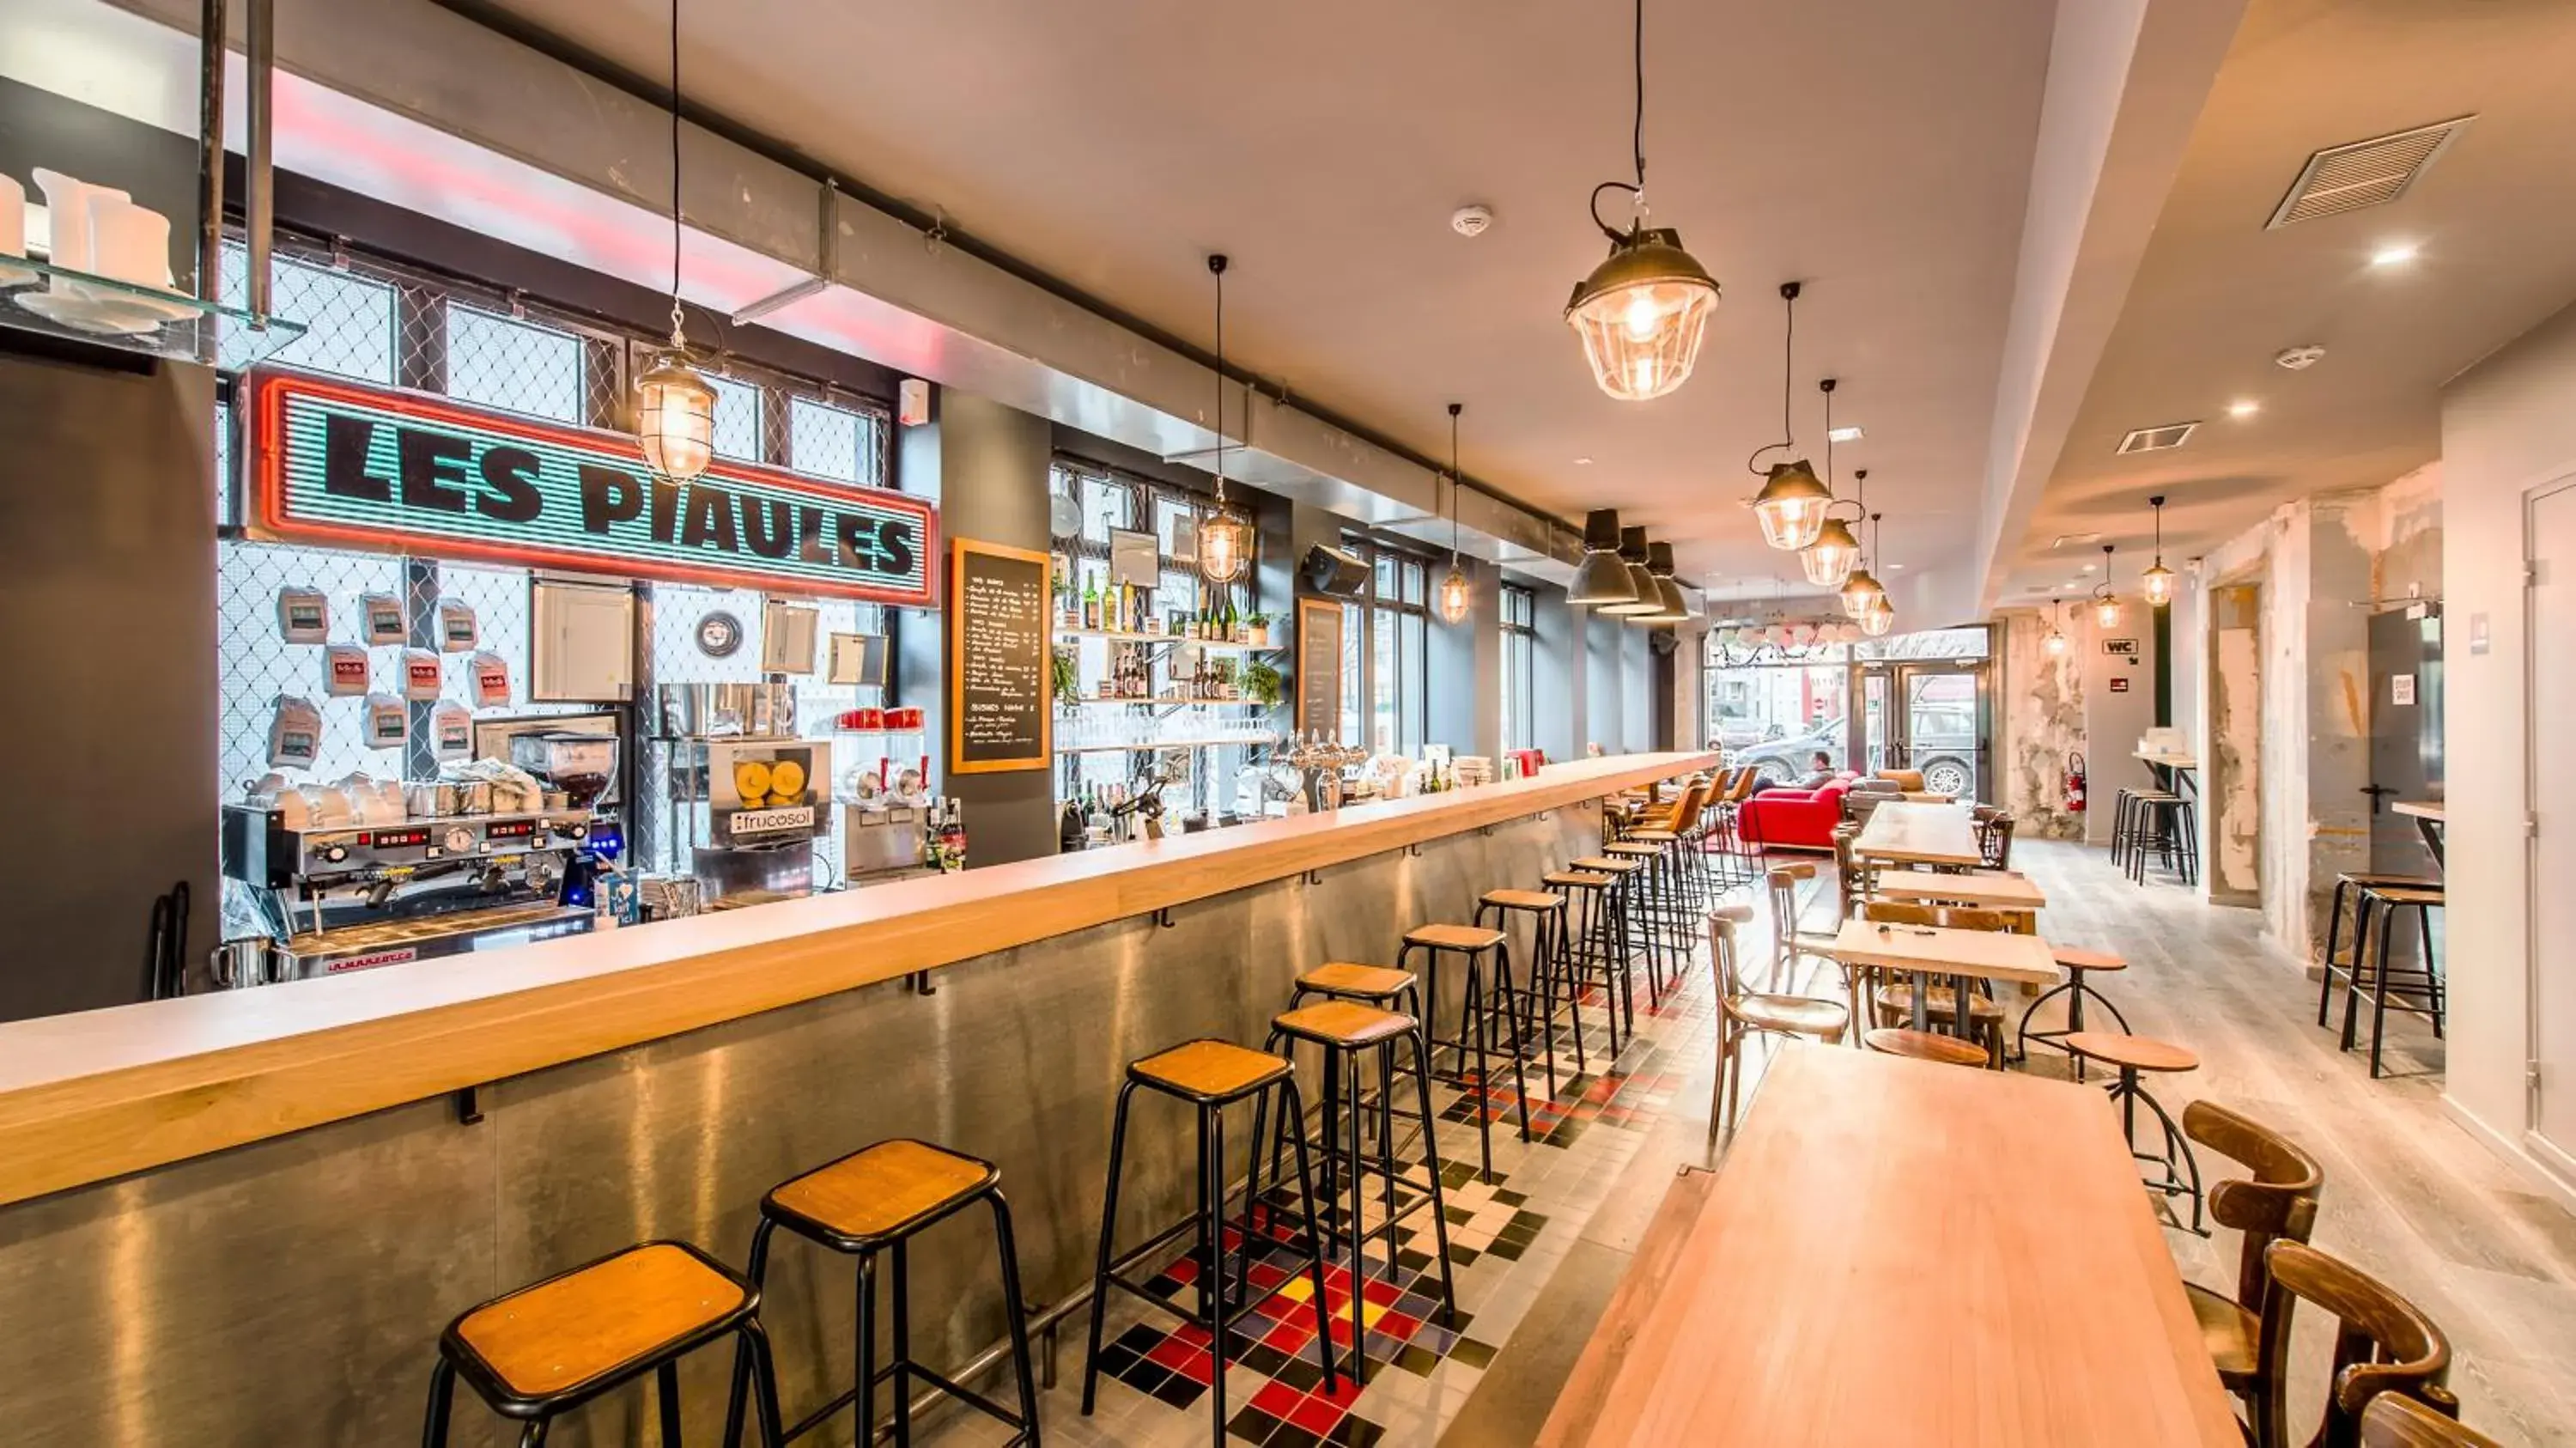 Restaurant/places to eat, Lounge/Bar in The People - Paris Belleville IEx Les PiaulesI